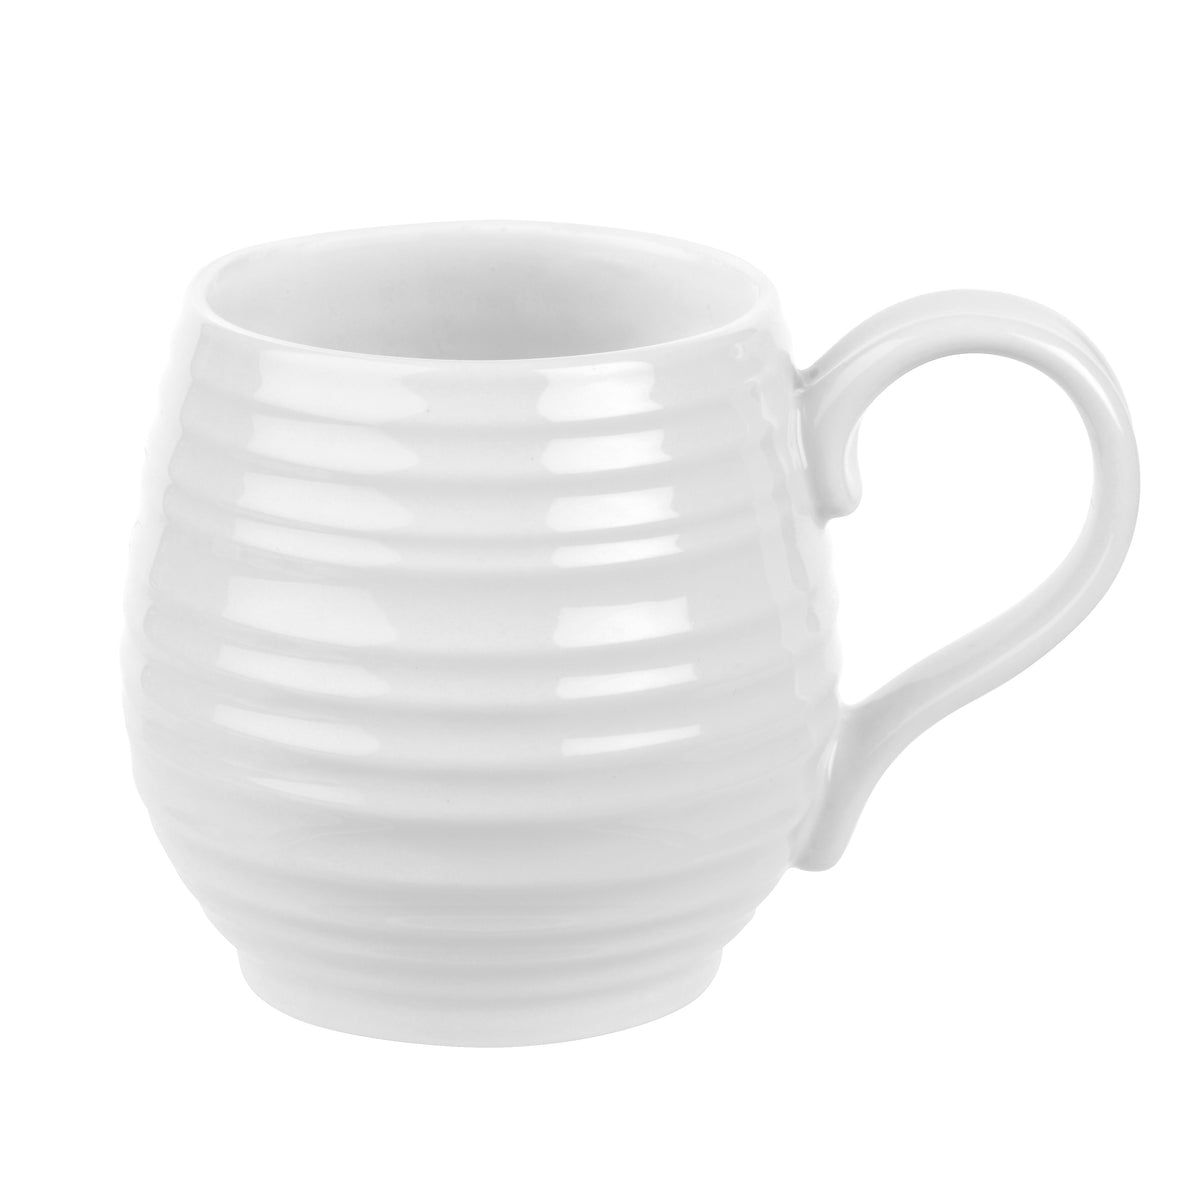 Sophie Conran Honeypot Mug, S/4